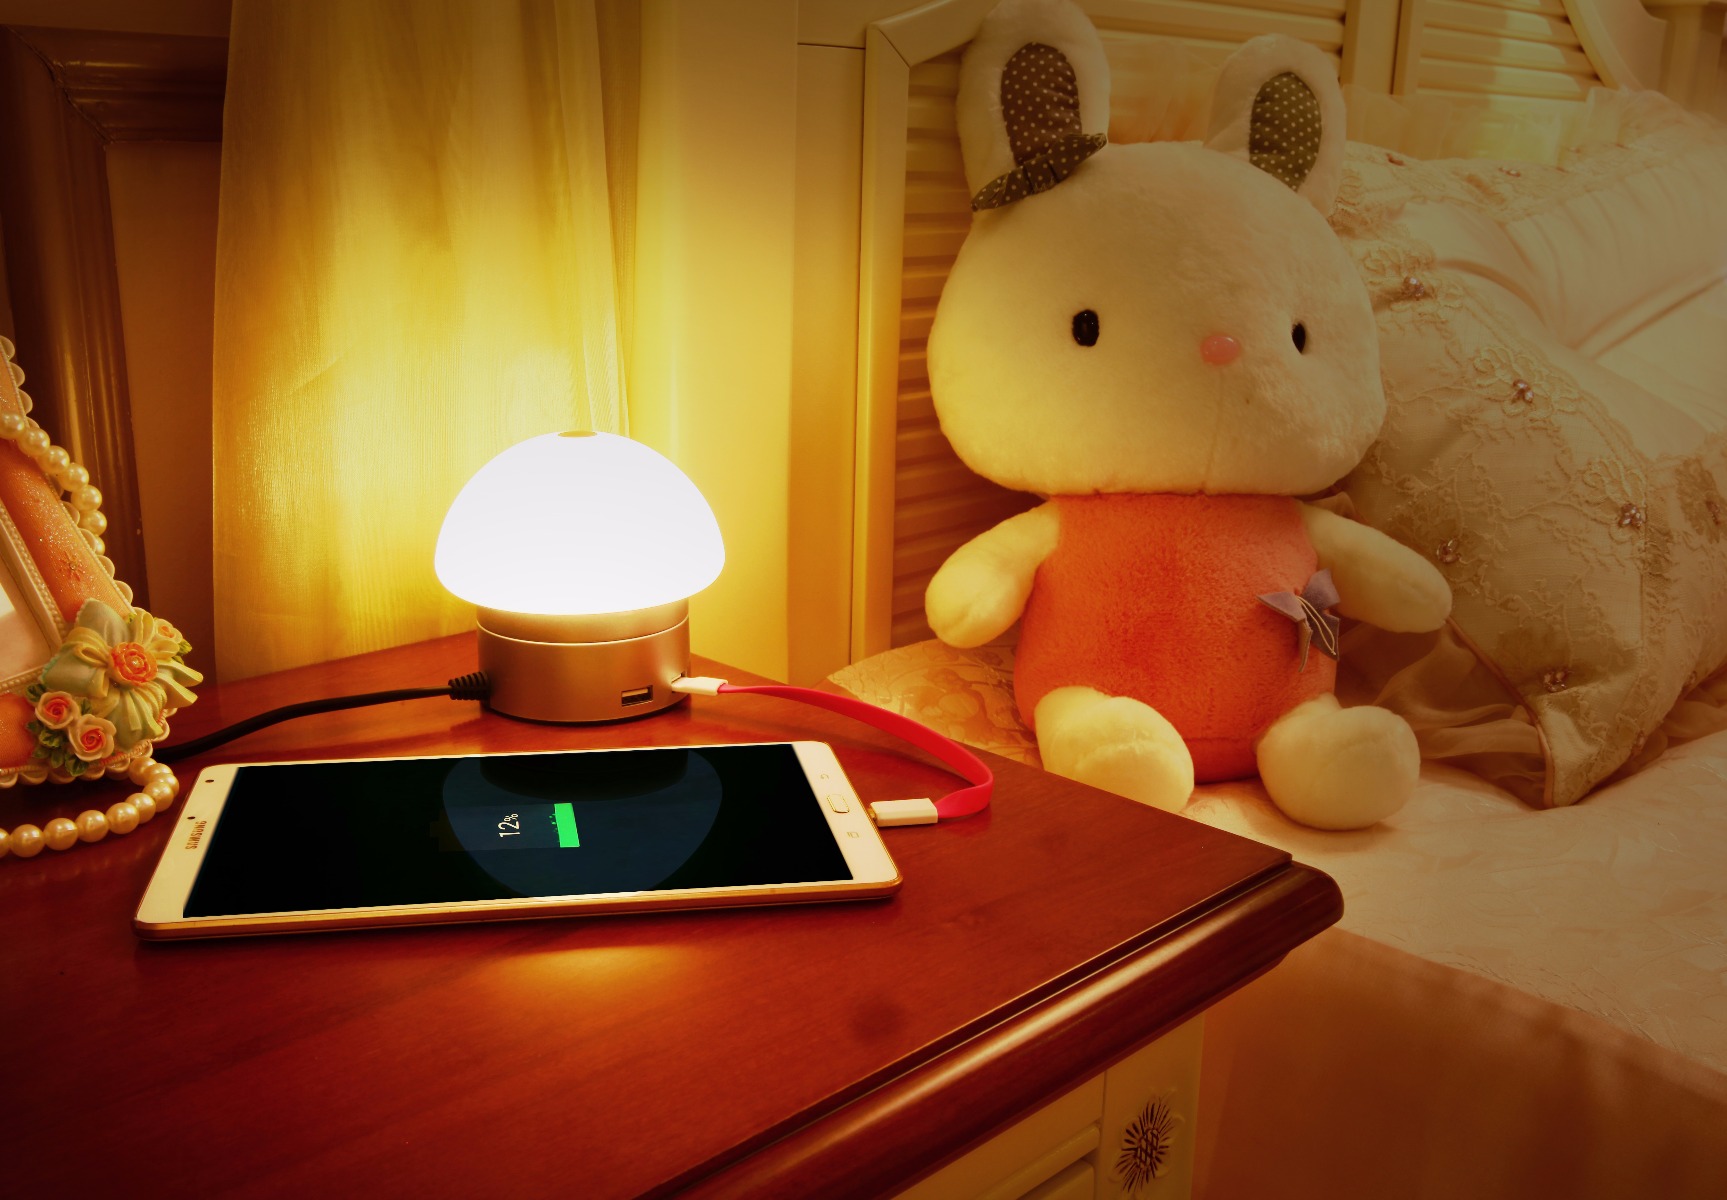 Seenda USB Charger 6 Port Hub Desktop LED Touch Lamp